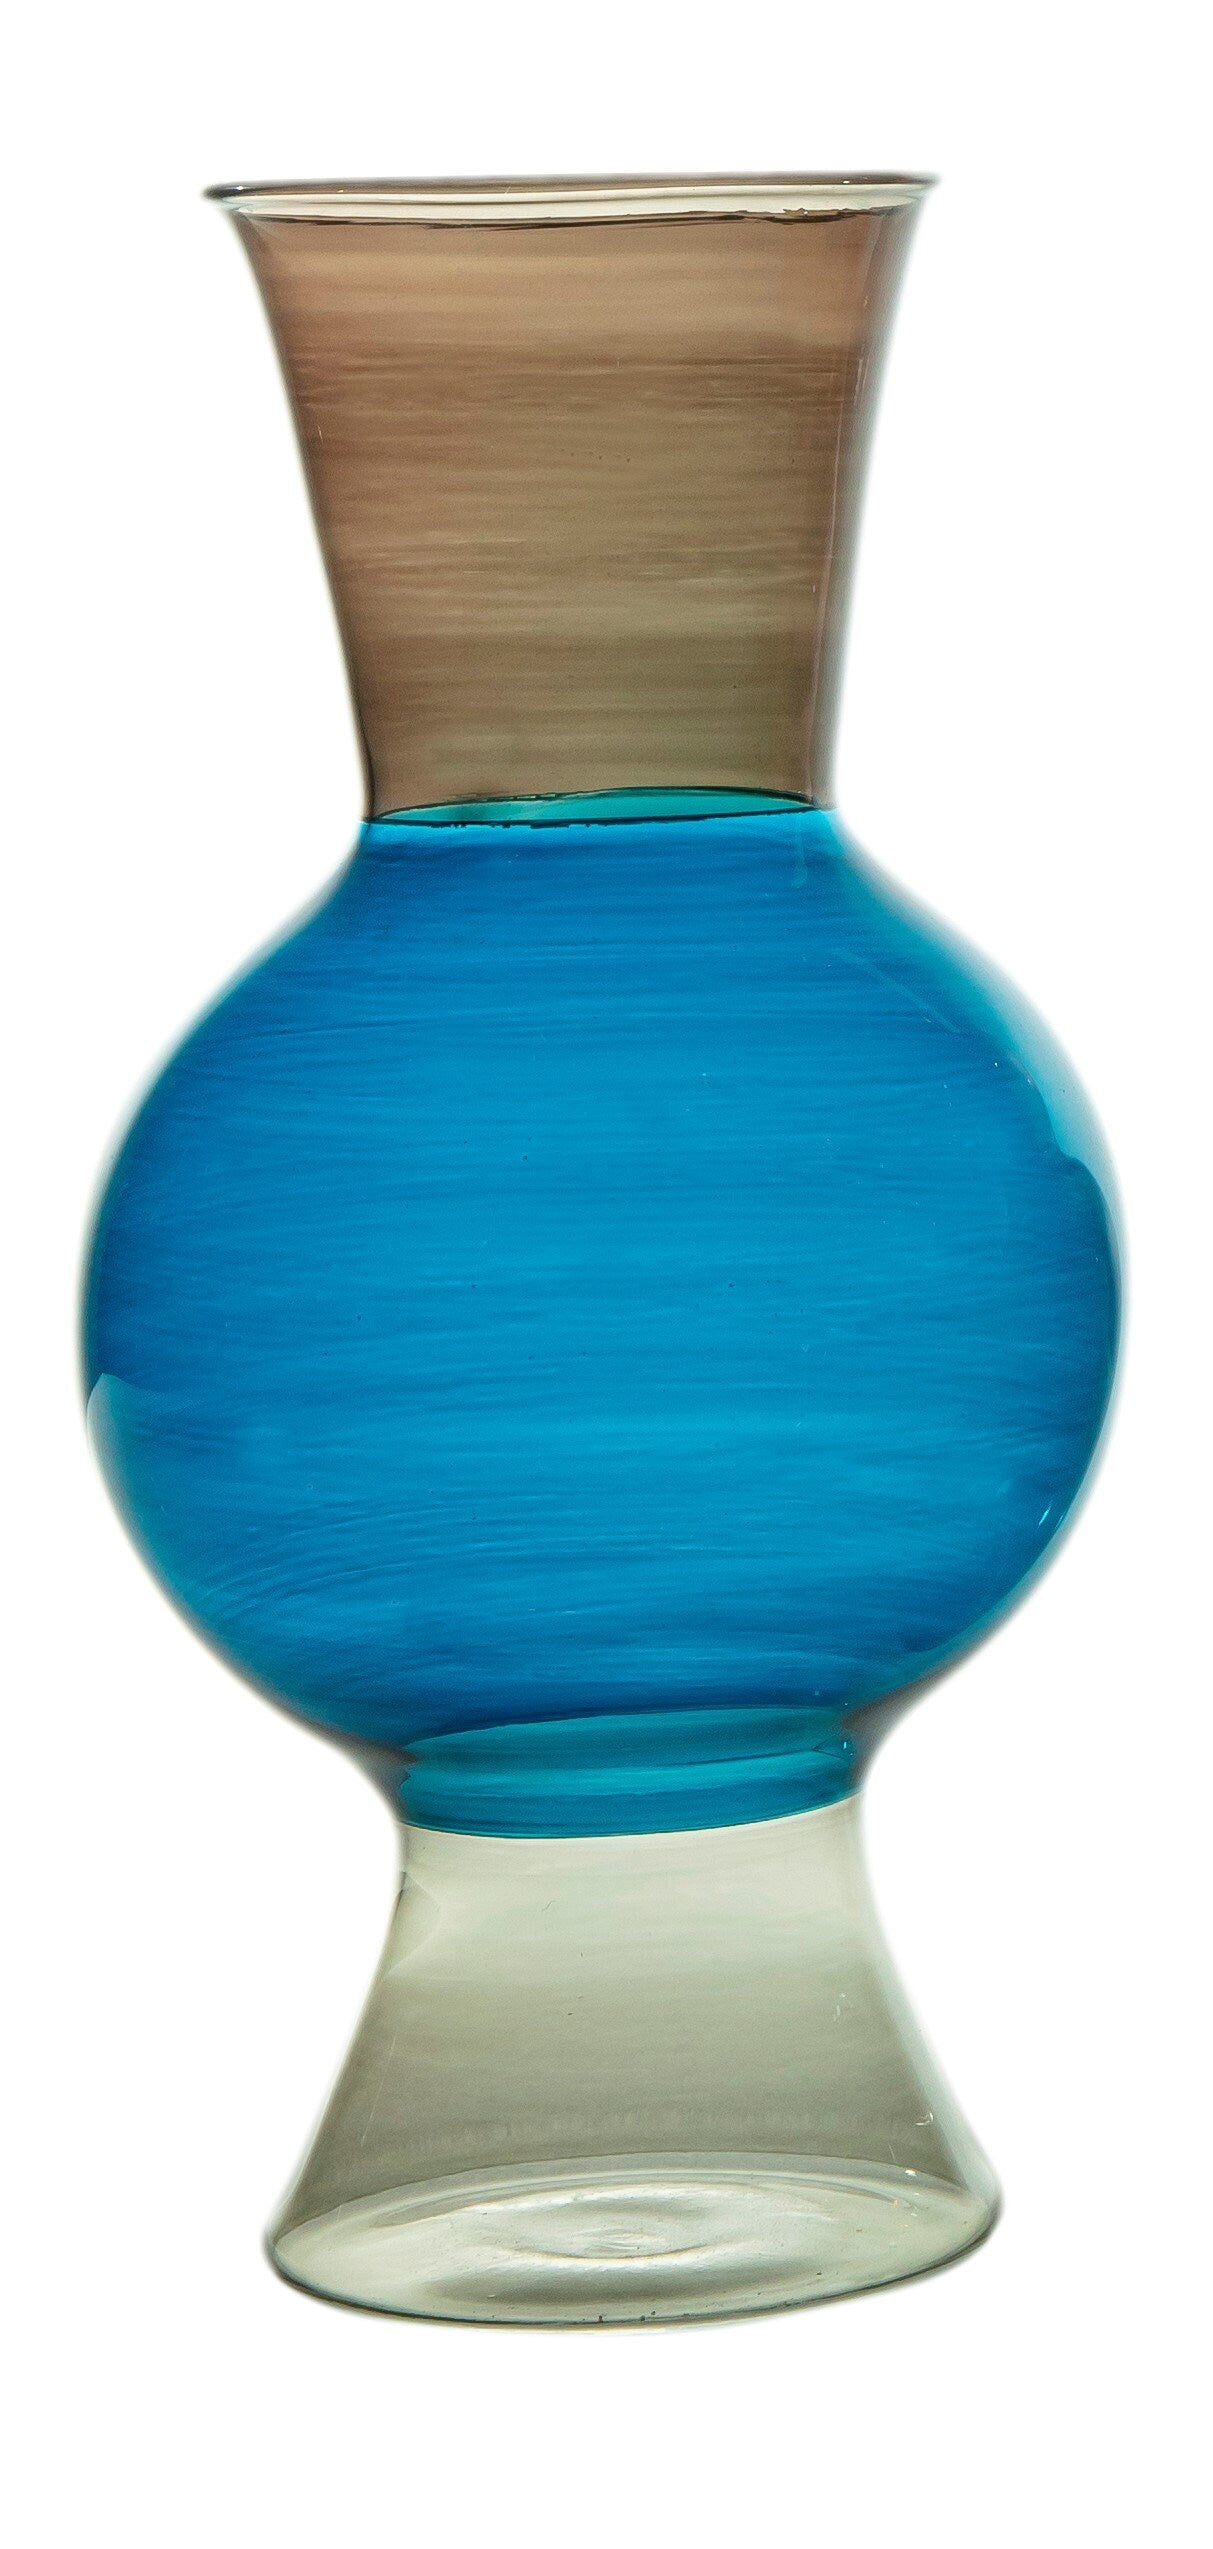 Multicolored Art Deco Vase , Hand Blown Glassware , Blown Glass Vases , Vintage Glass Vase , Colored Glass Vases , Vase for Flowers - Les Trois Pyramides 